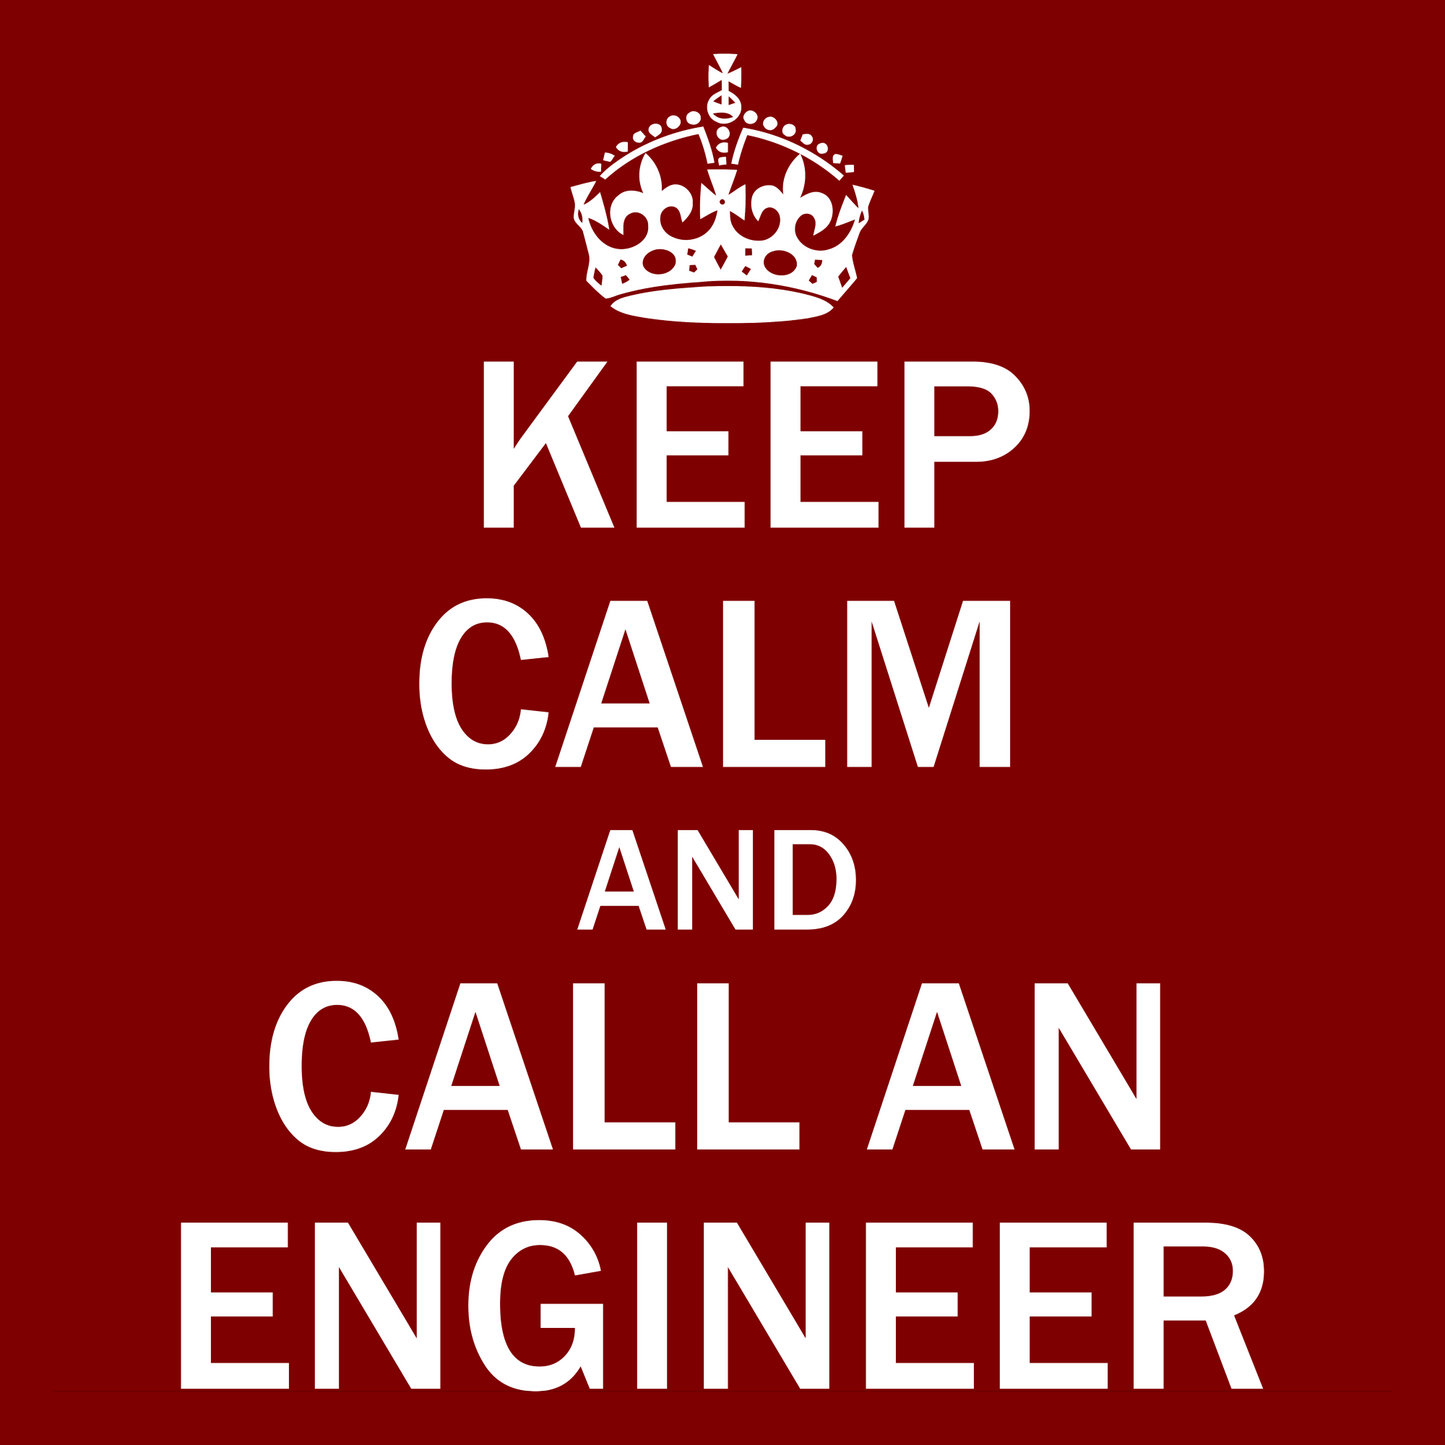 Keep Calm and Call an Engineer